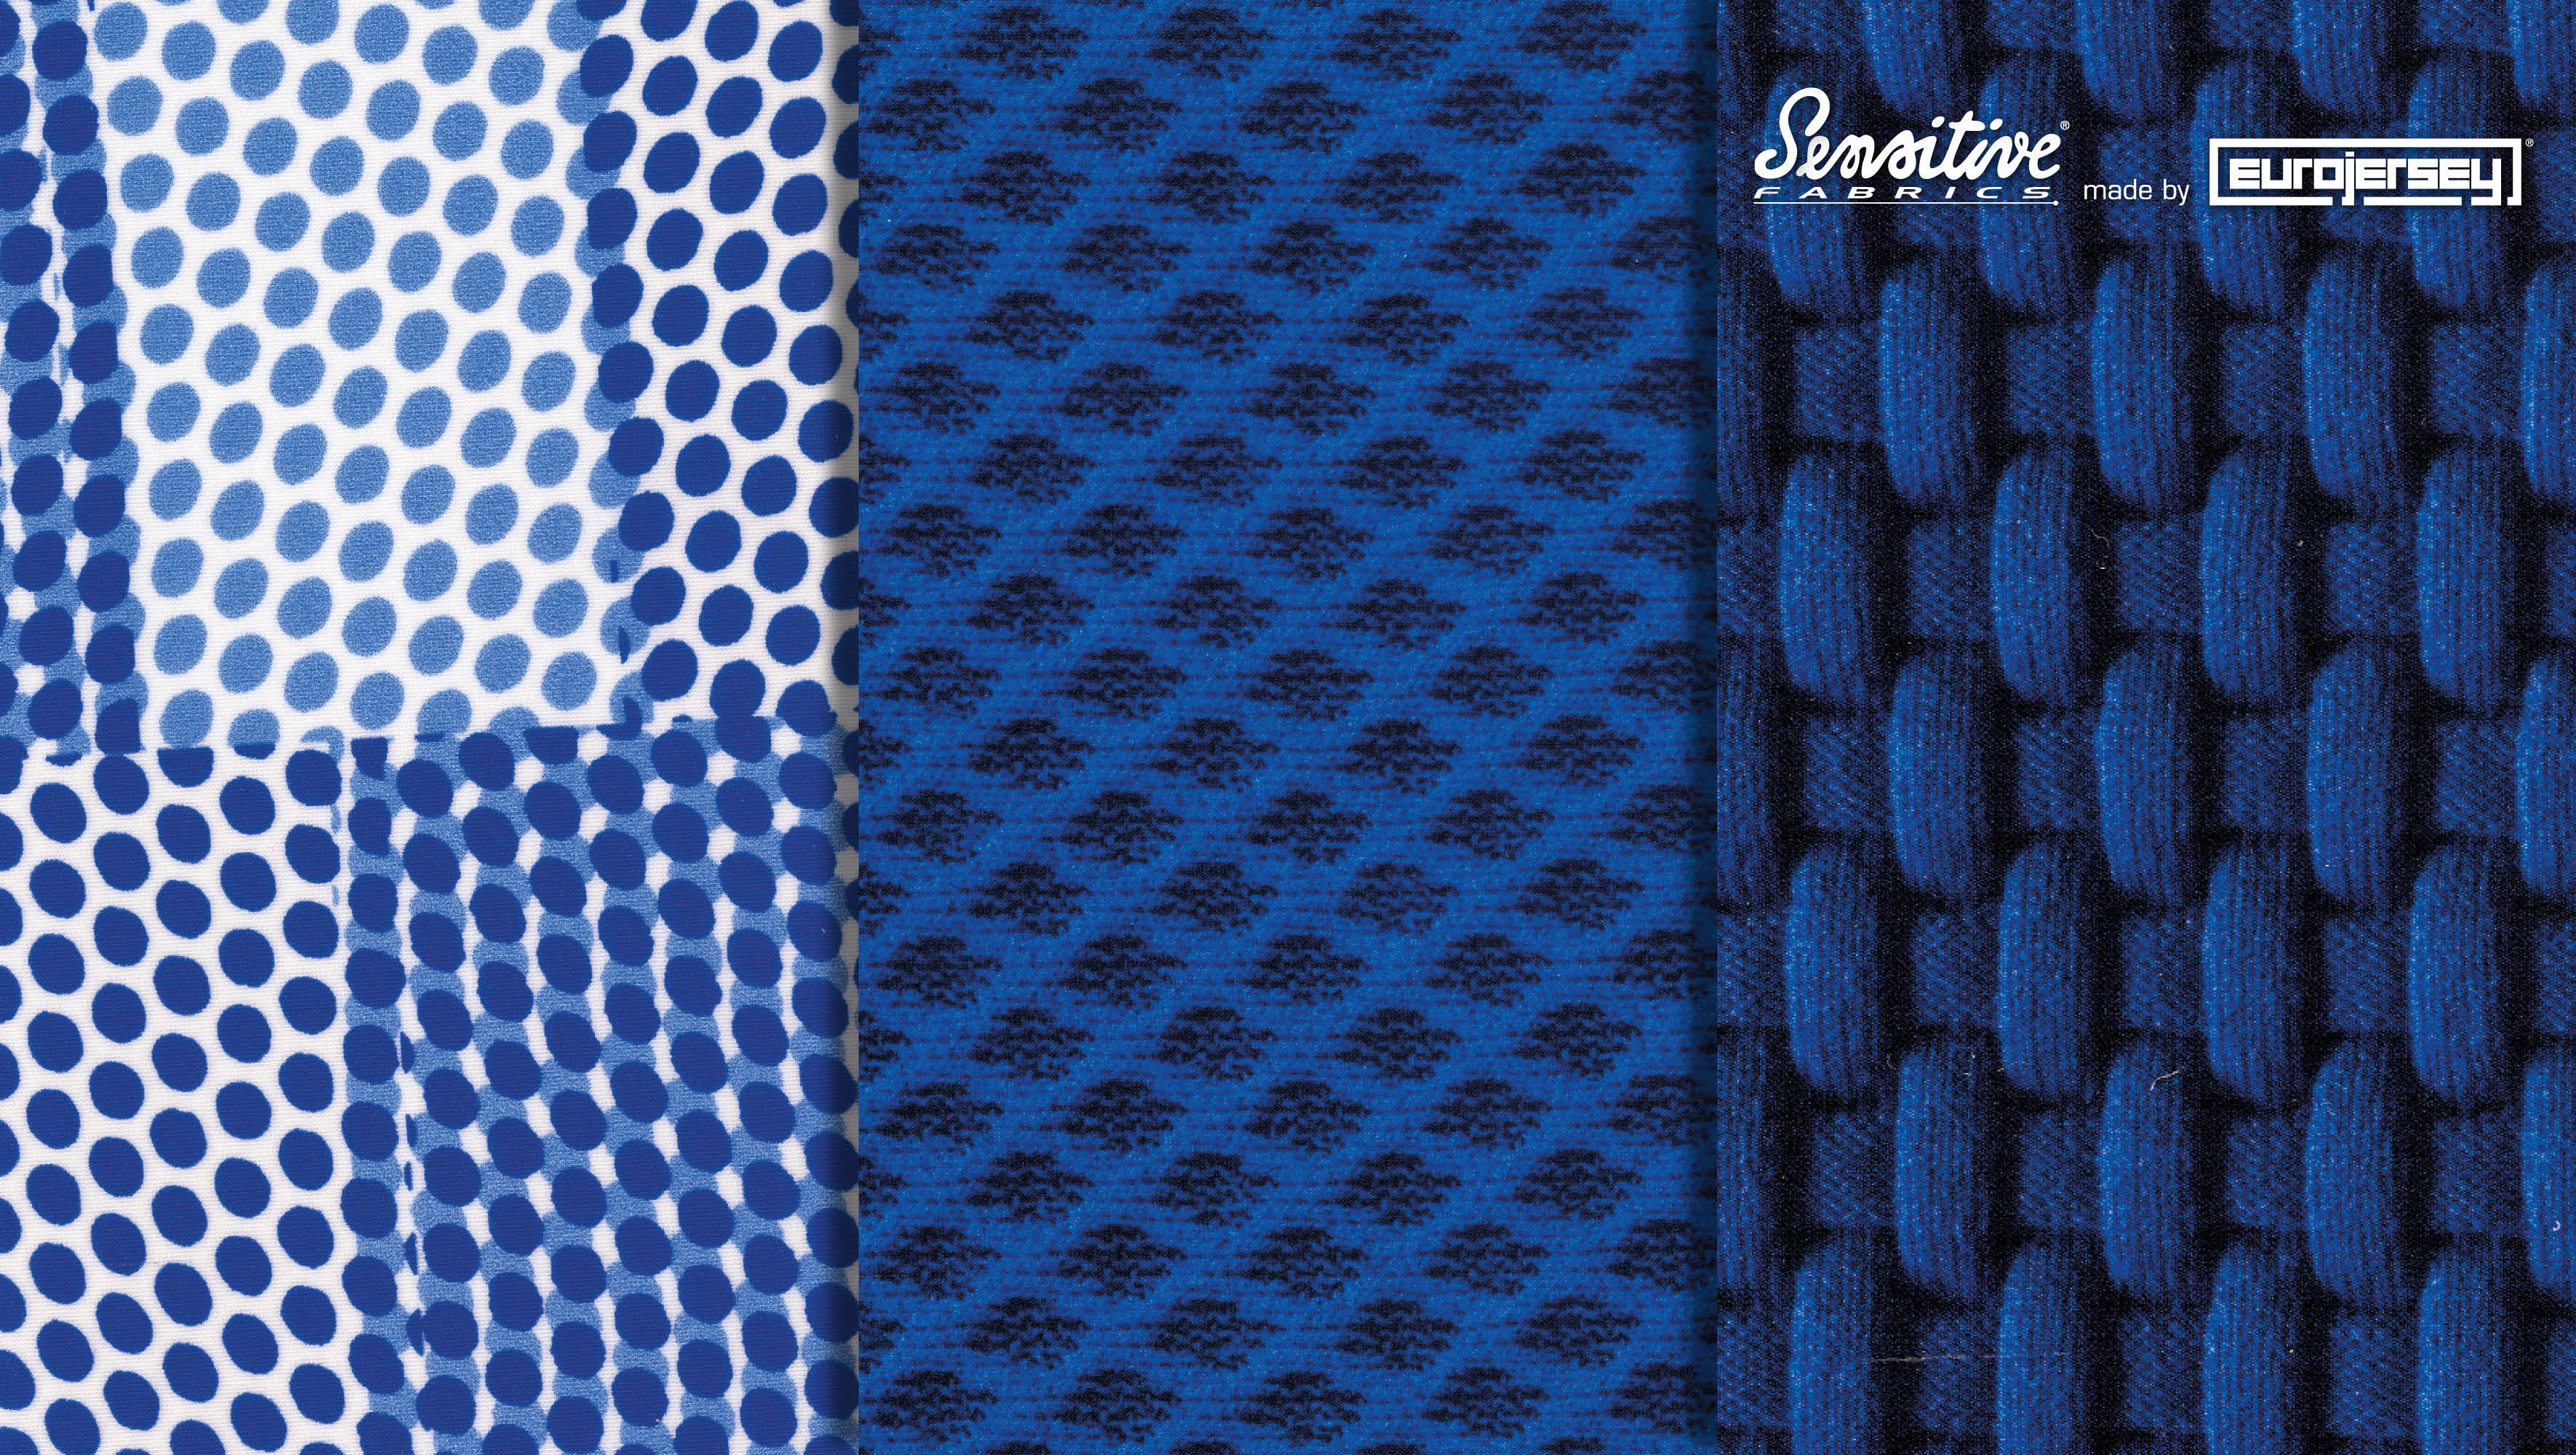 Eurojersey’s Tessuti Sensitive Fabrics. © Invista/ Eurojersey